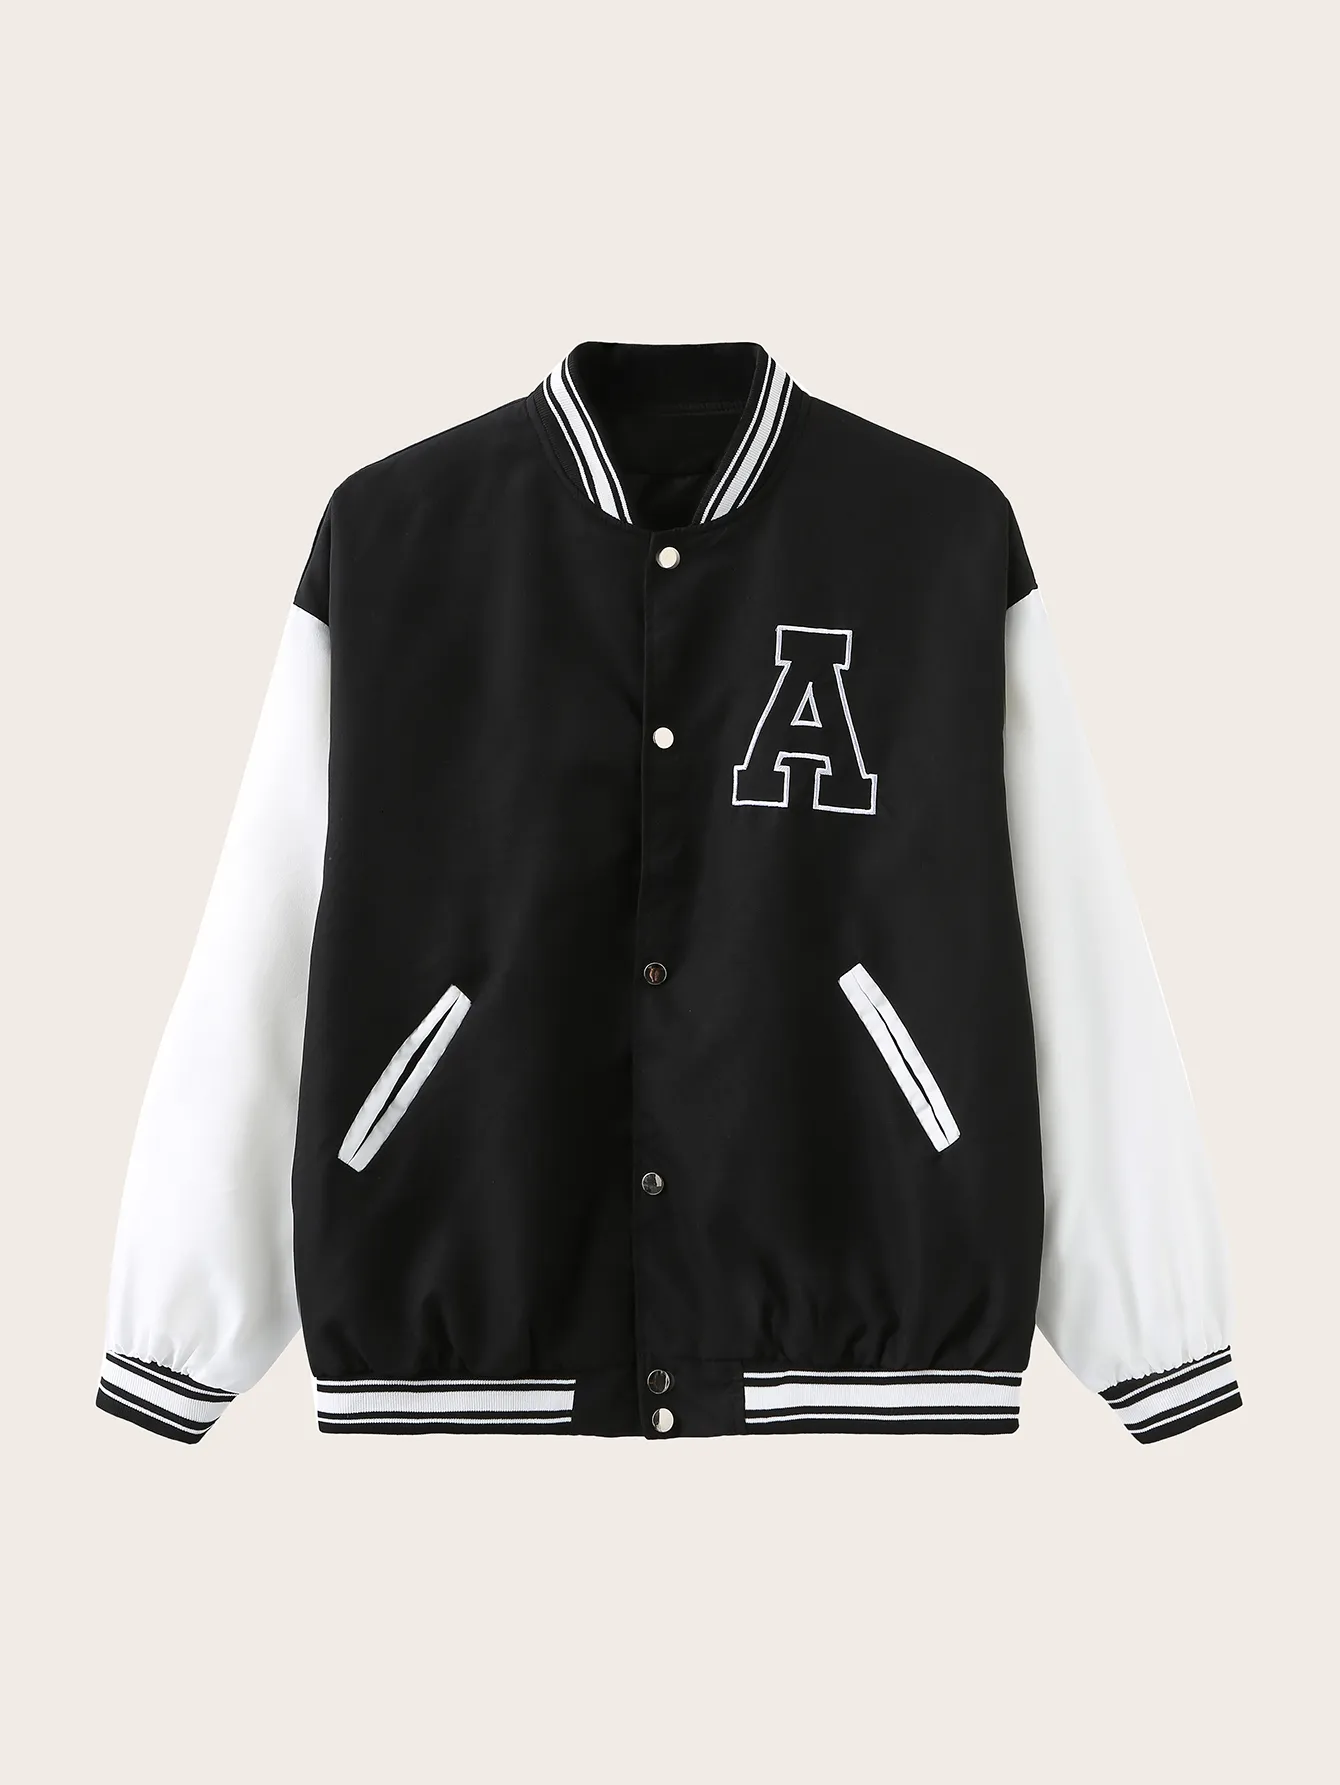 Frauens Jacke Bomber Herbst Winter Fashion Baseball Uniform übergroße Mäntel Studentin Harajuku Loose Streetwear Jacke 230818